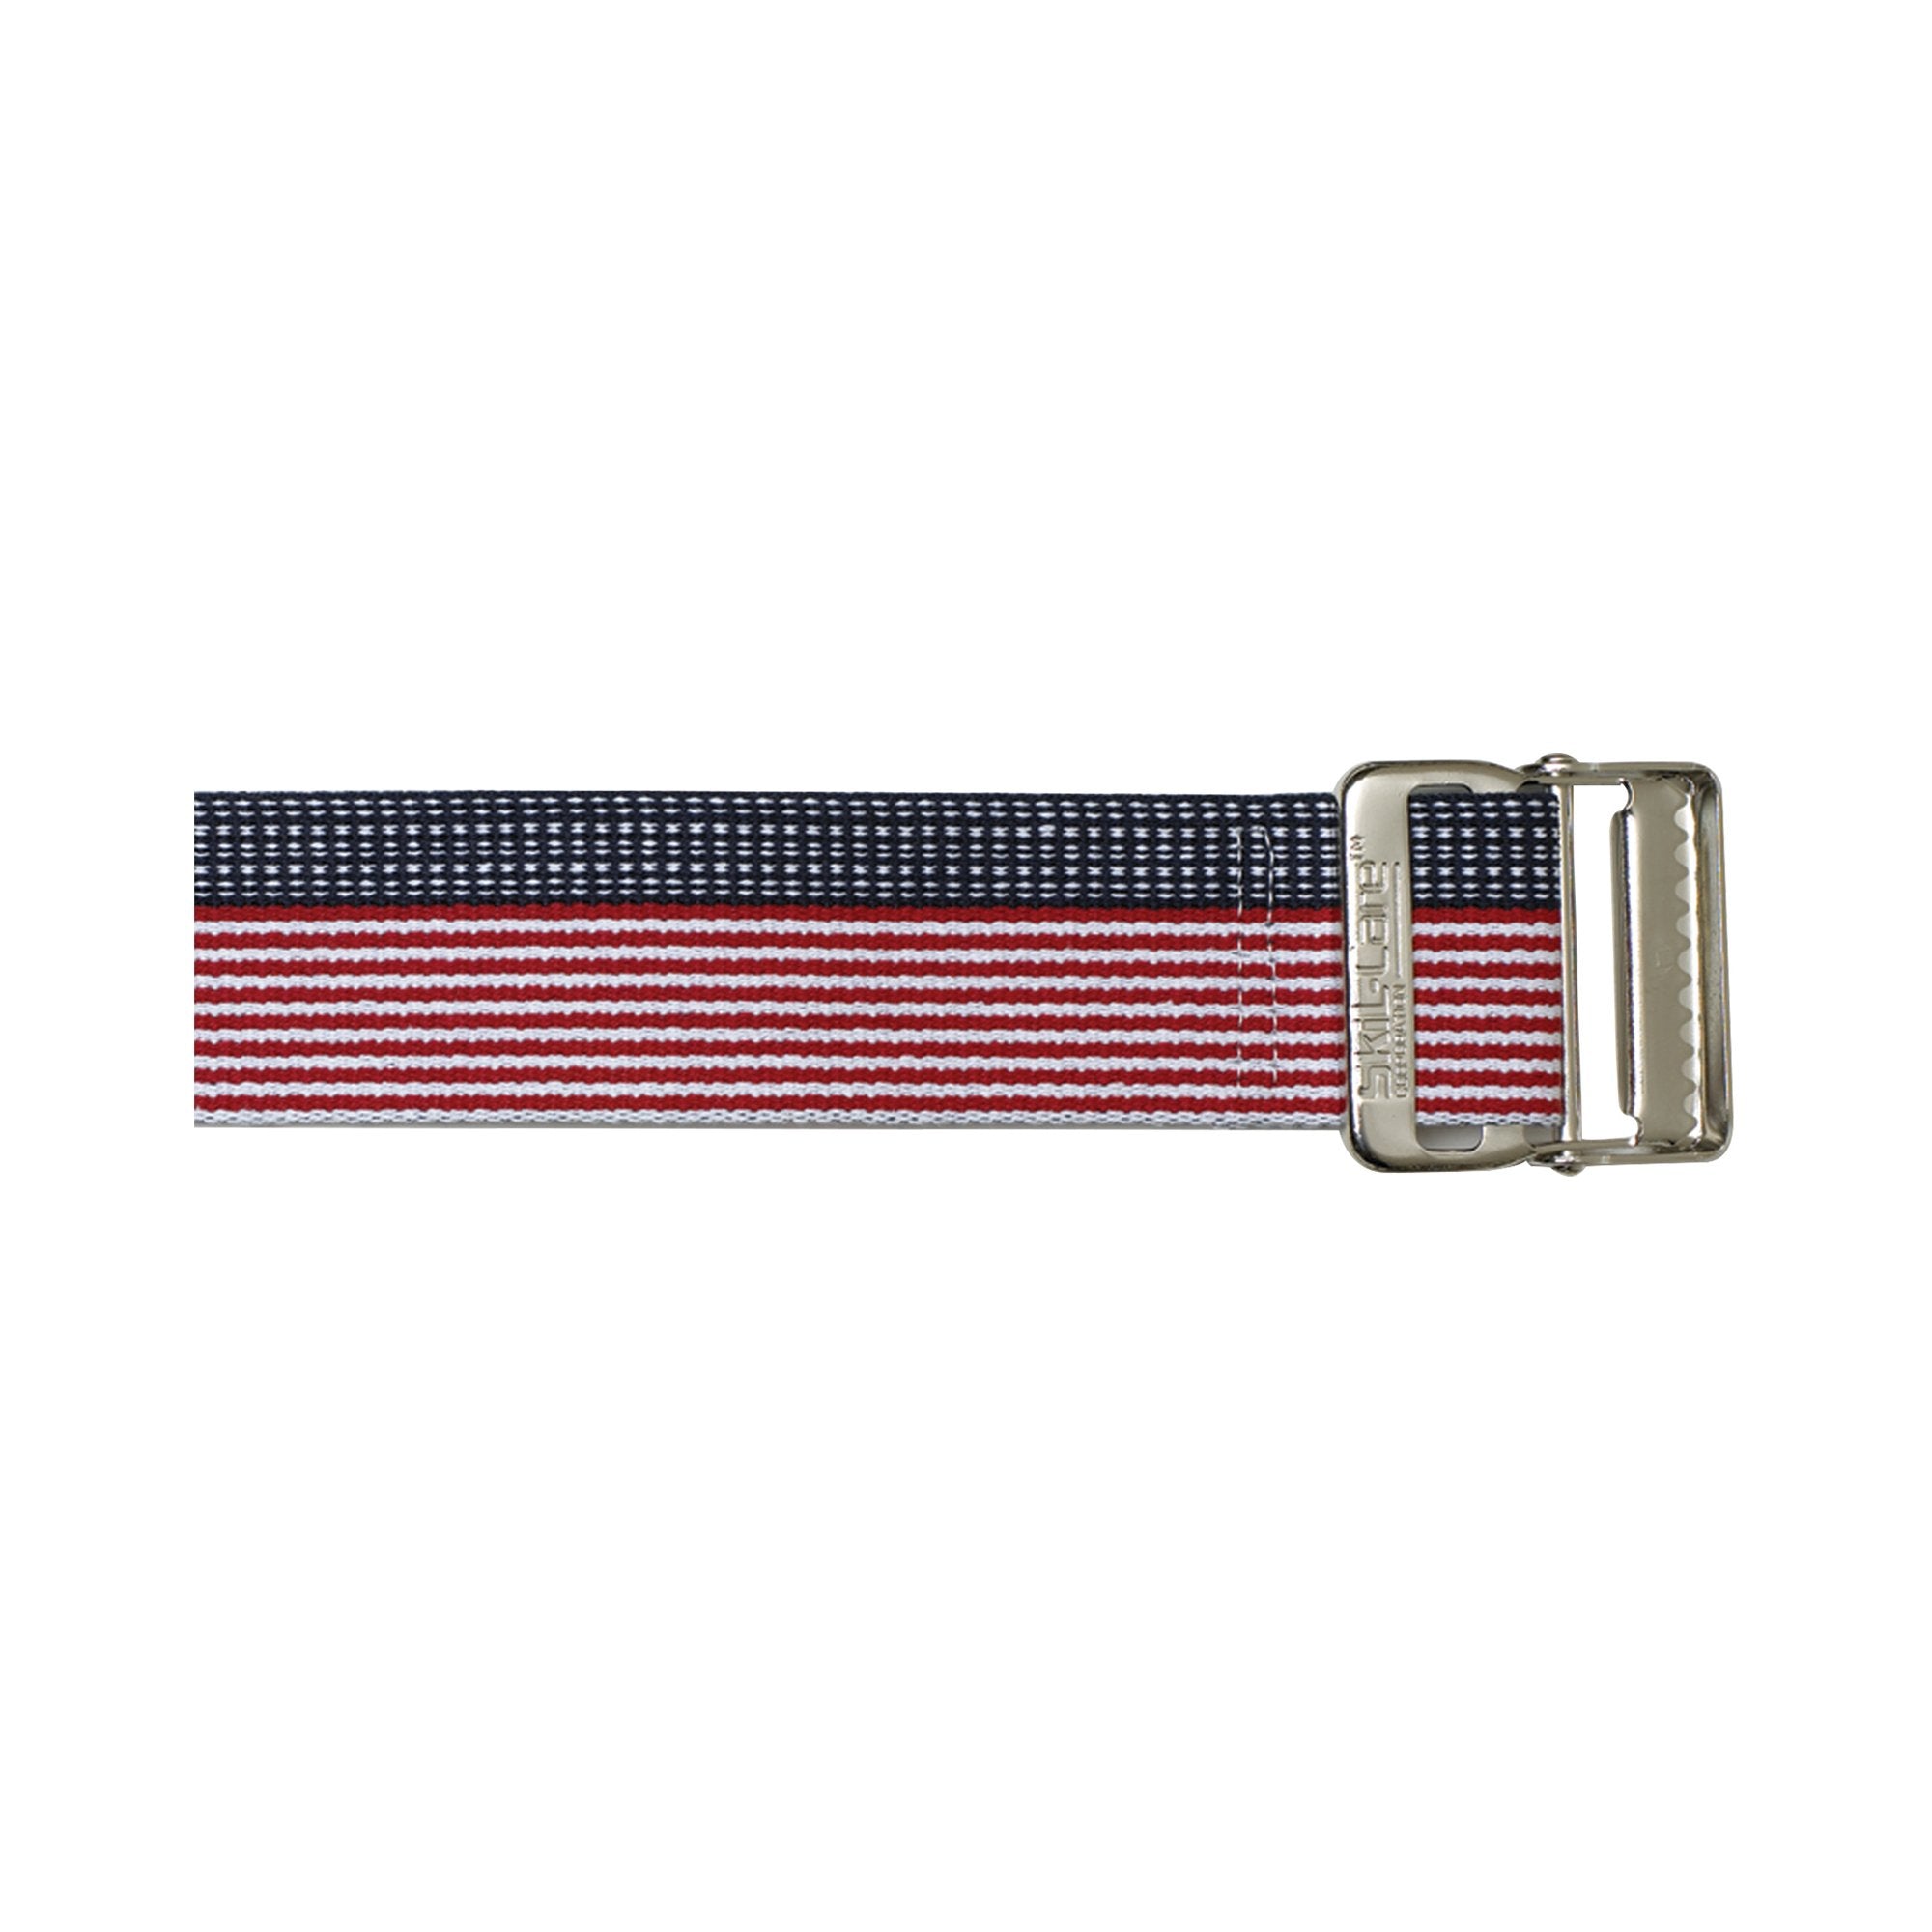 Gait Belt SkiL-Care 72 Inch Length Stars and Stripes Design Cotton